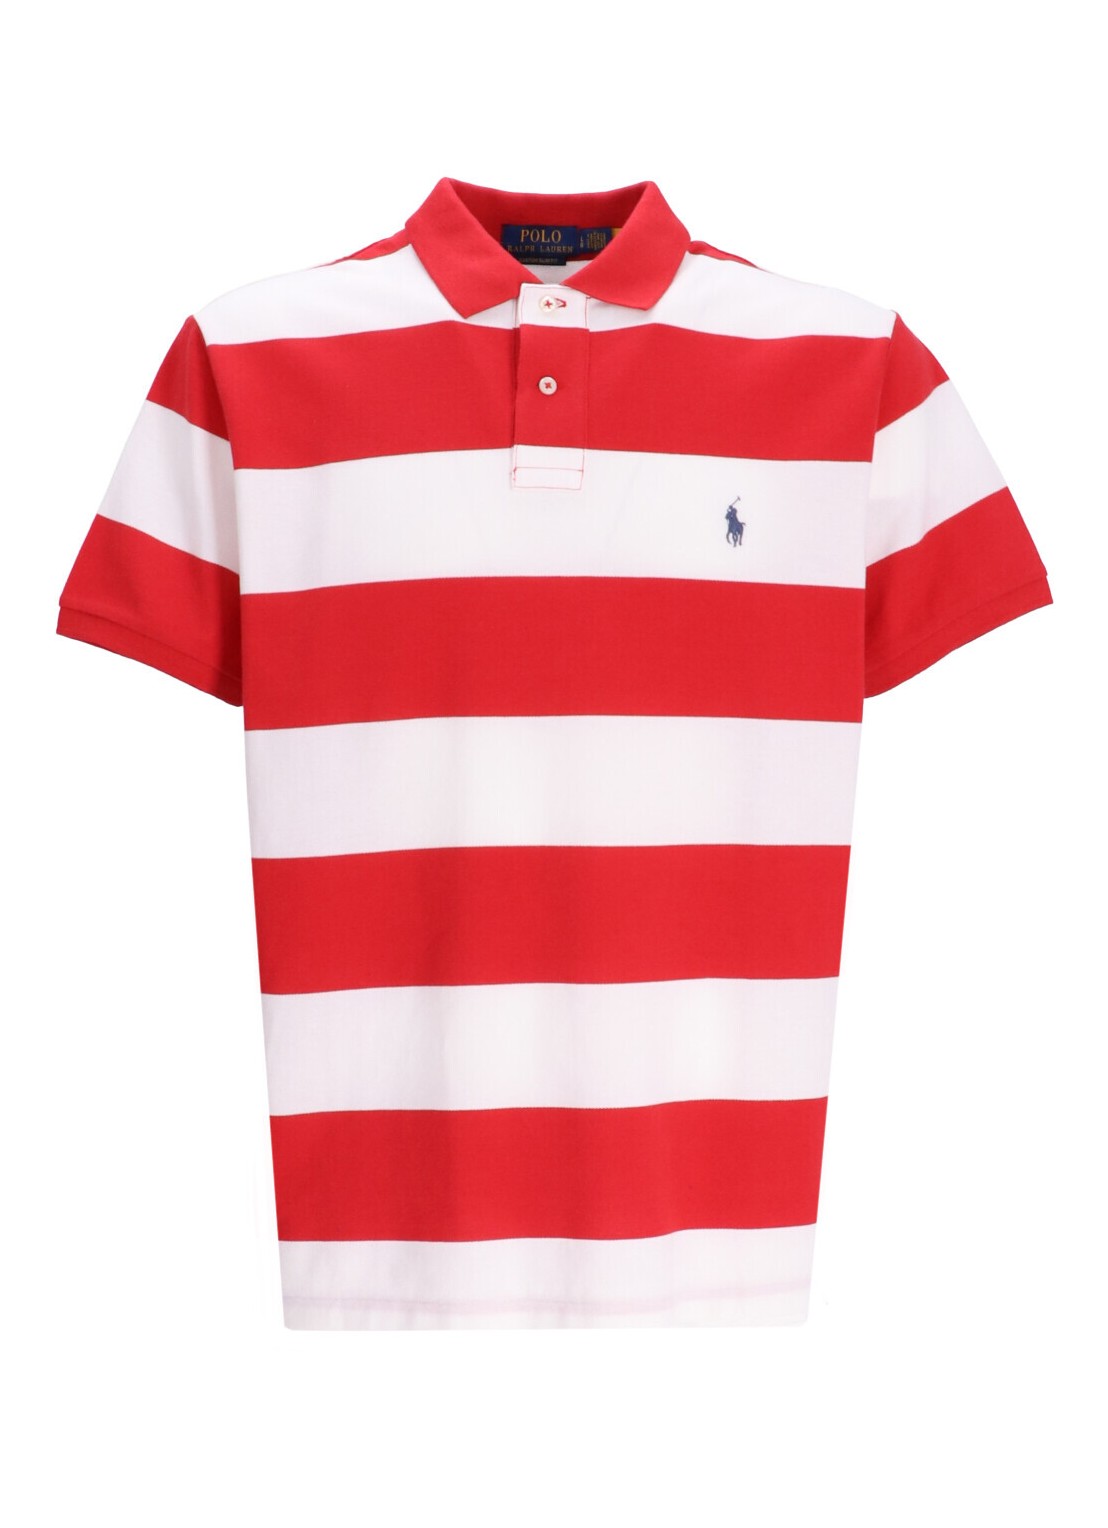 Polo polo ralph lauren sskcm3-short sleeve-polo shirt - 710926400003 post red white talla XL
 